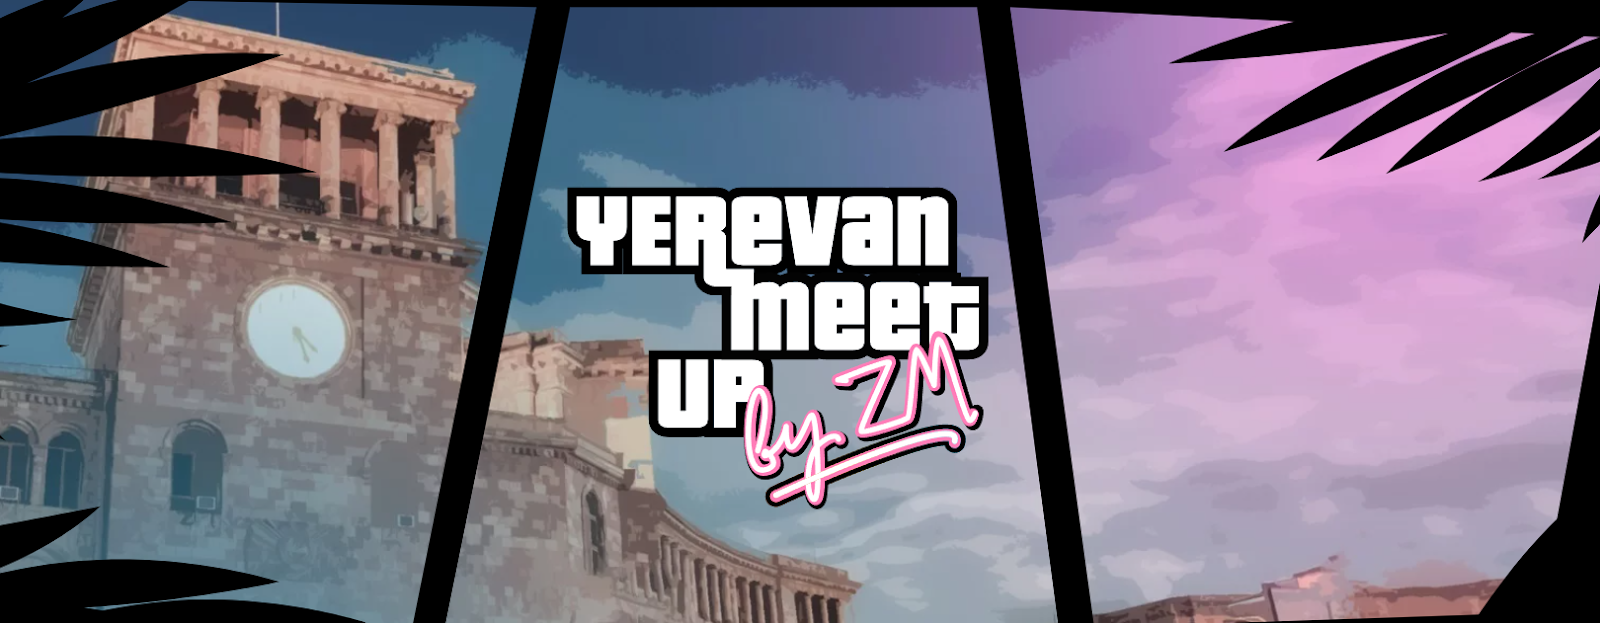 Yerevan Meetup by ZM